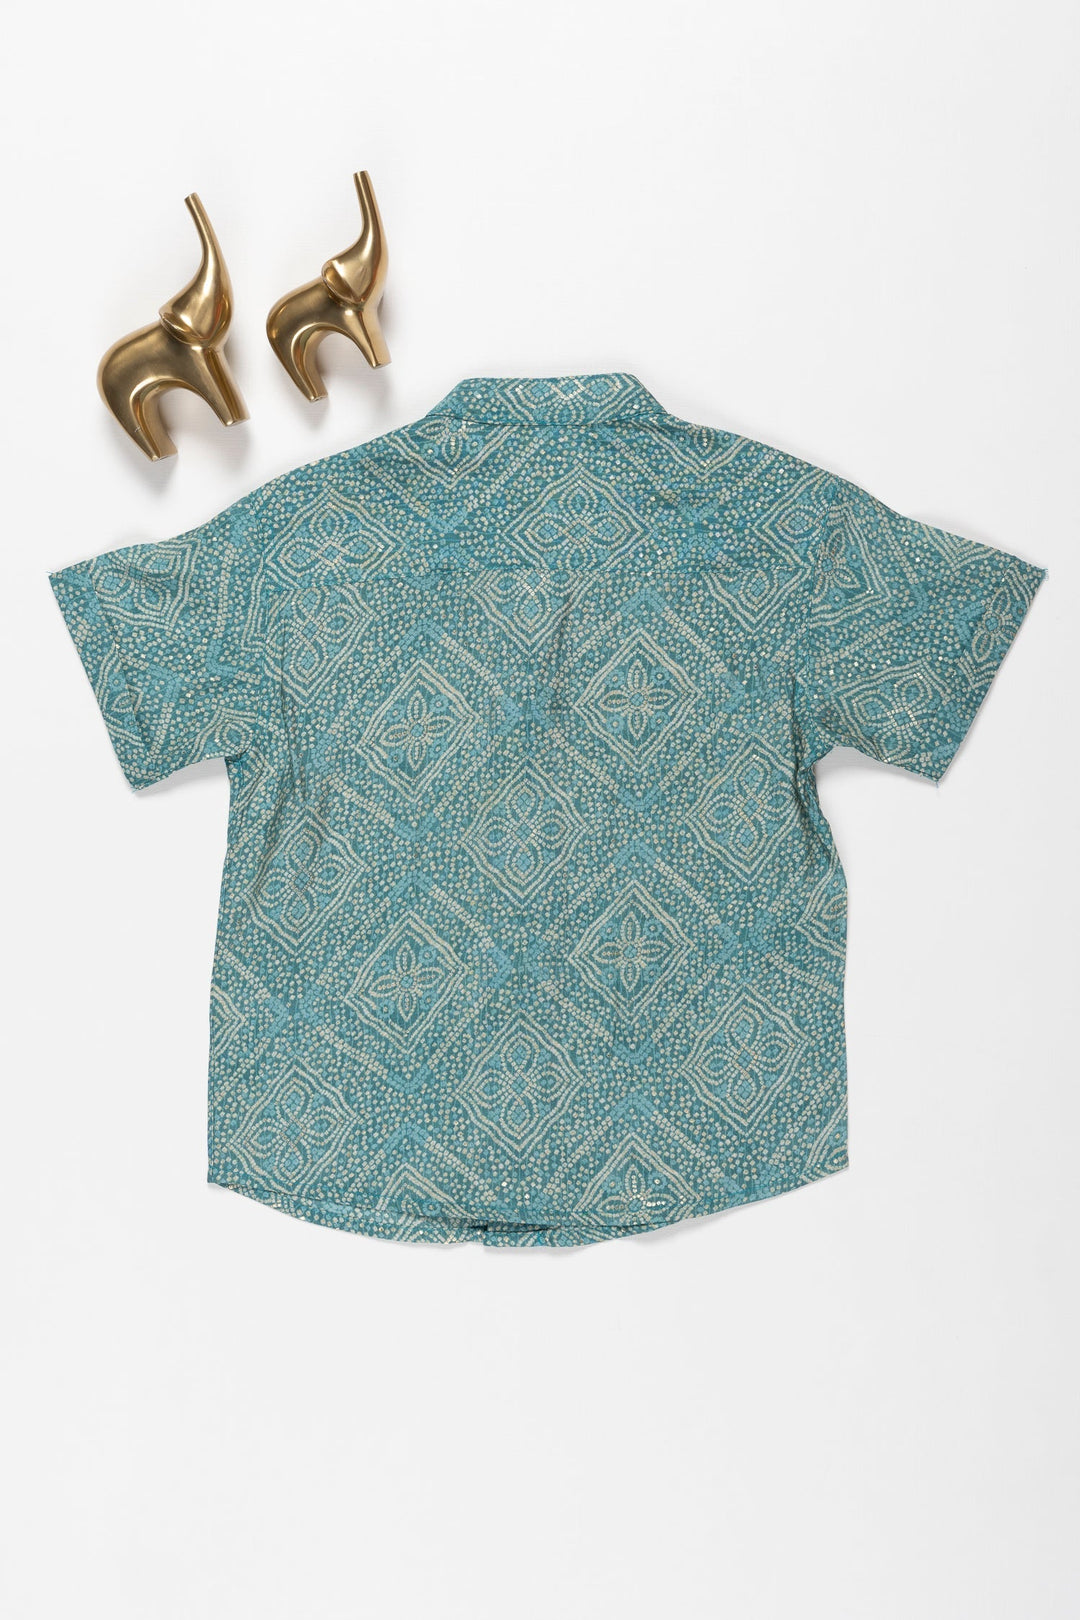 The Nesavu Boys Cotton Shirt Aqua Geometric Bliss Cotton Shirt for Boys - Cool Comfort Nesavu Boys Aqua Geometric Print Shirt | Fresh Style & Ultimate Comfort | The Nesavu